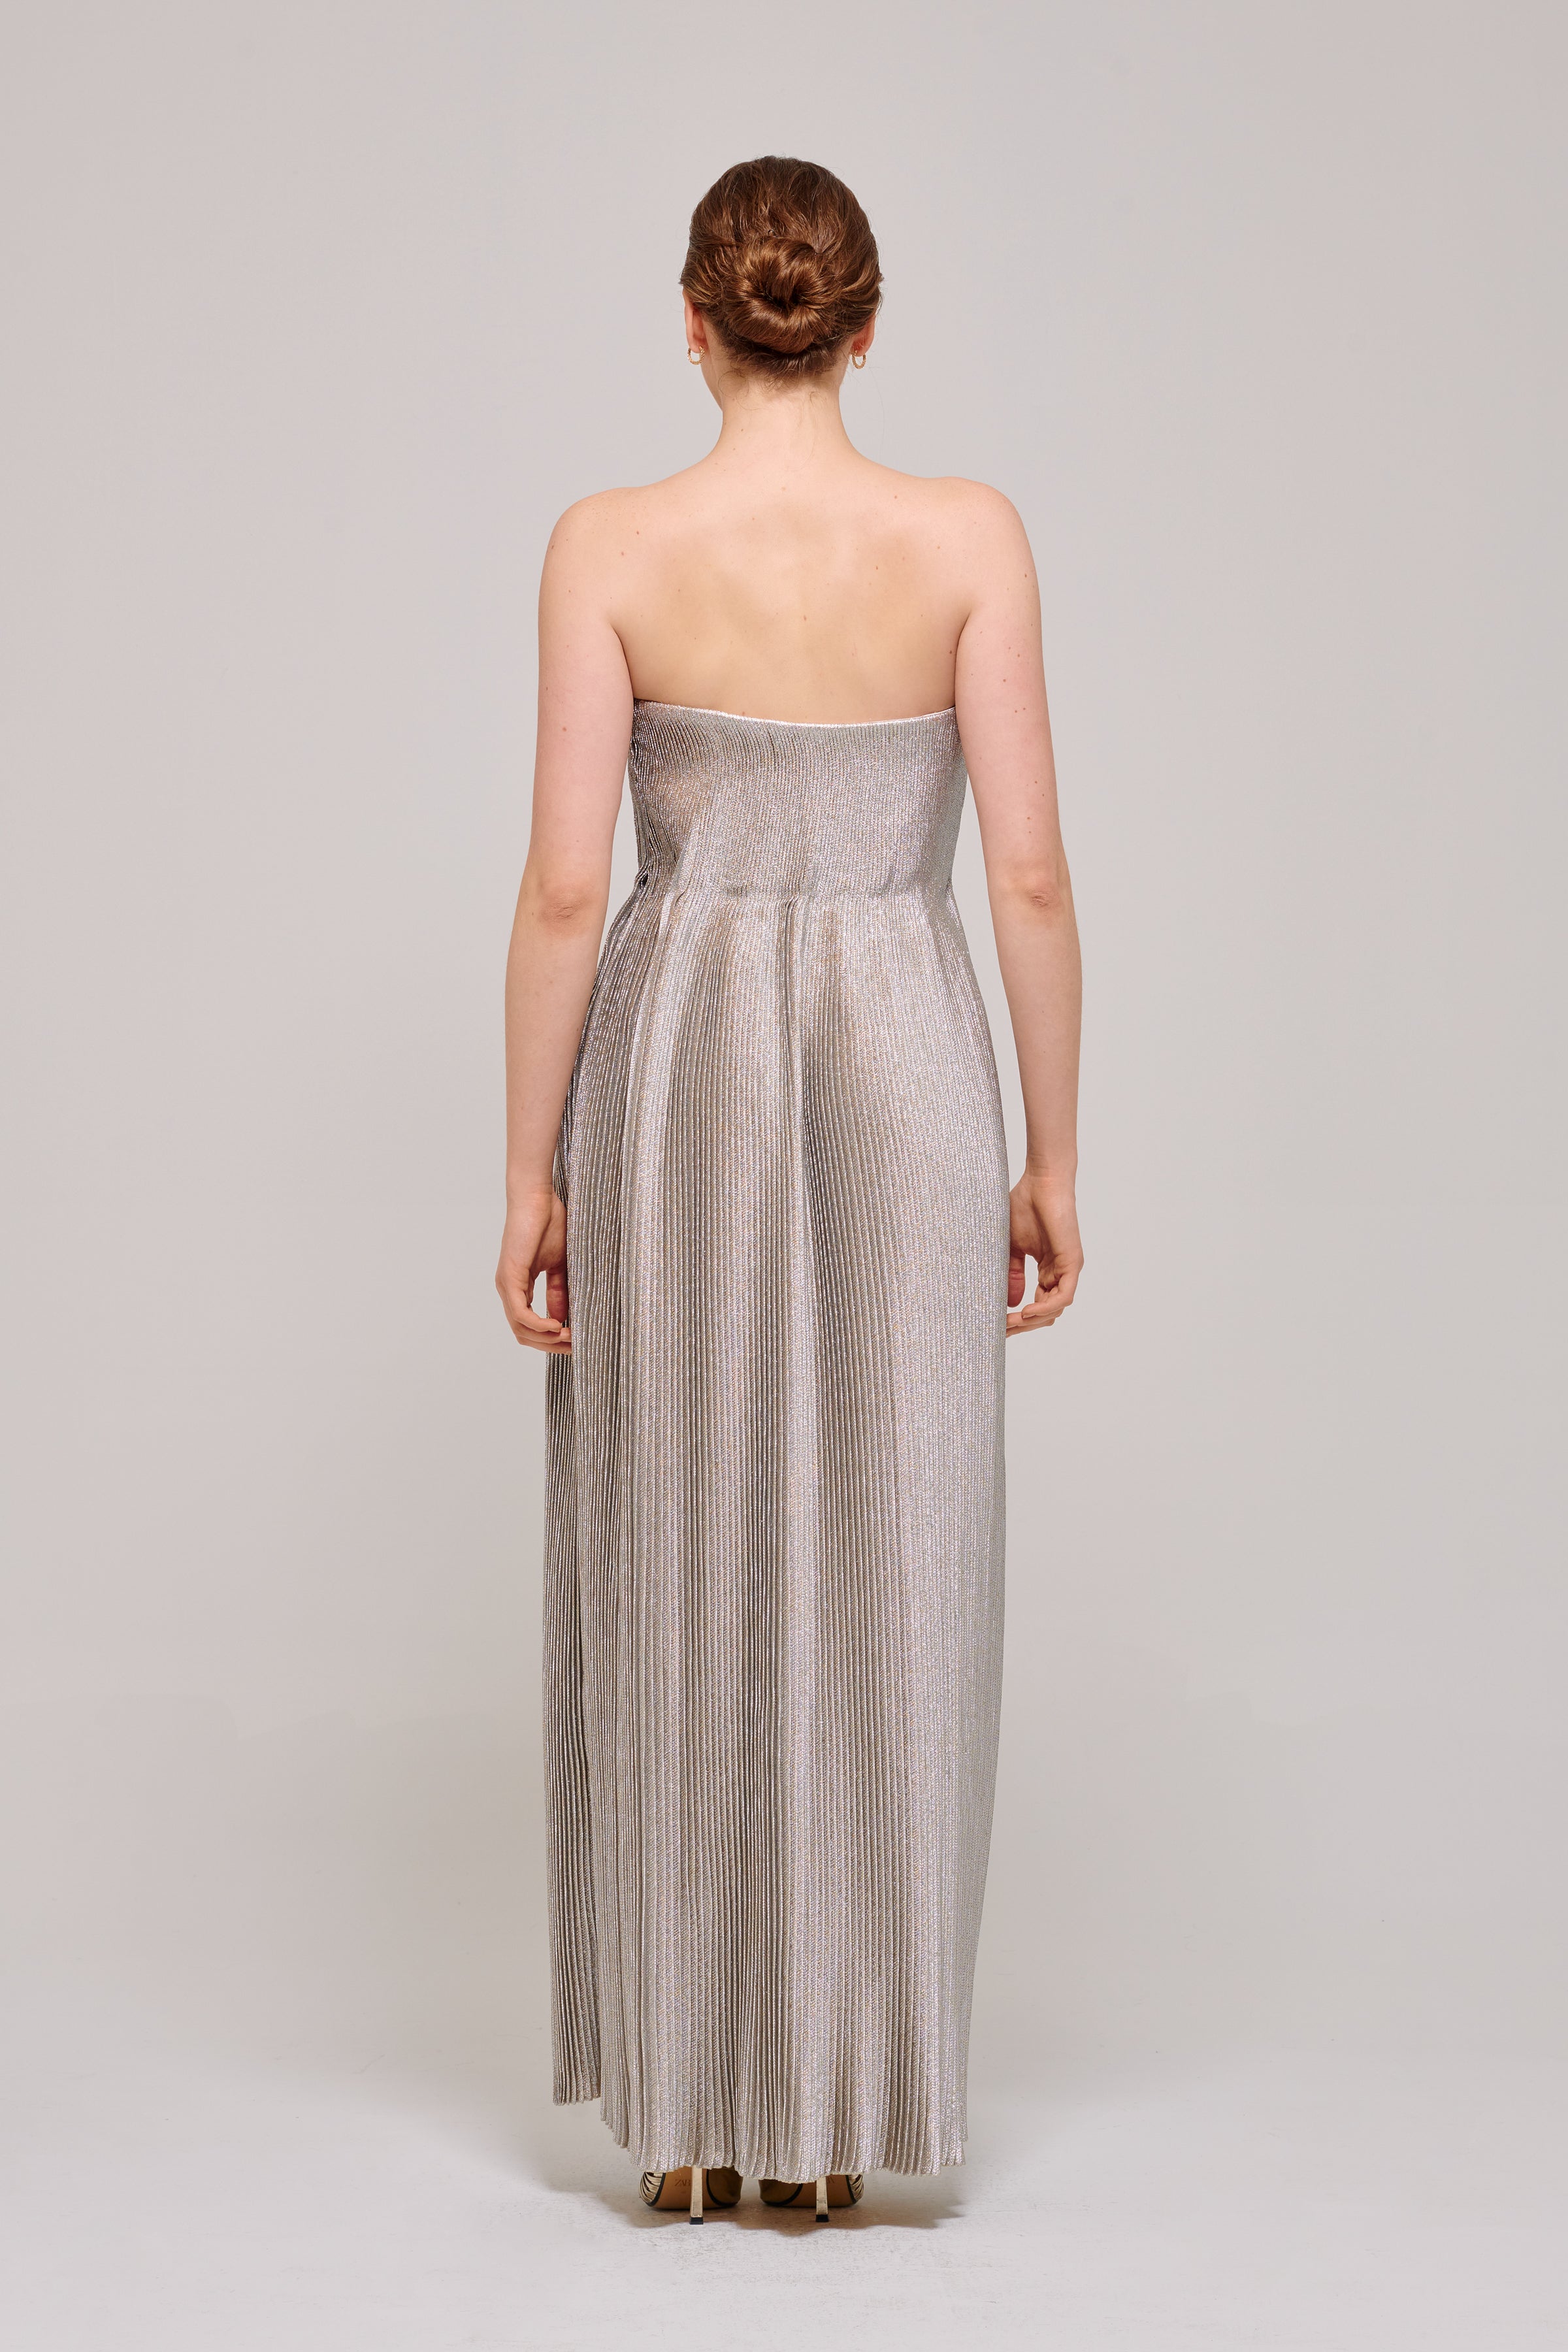 Strapless Gray Pleated Maxi Dress